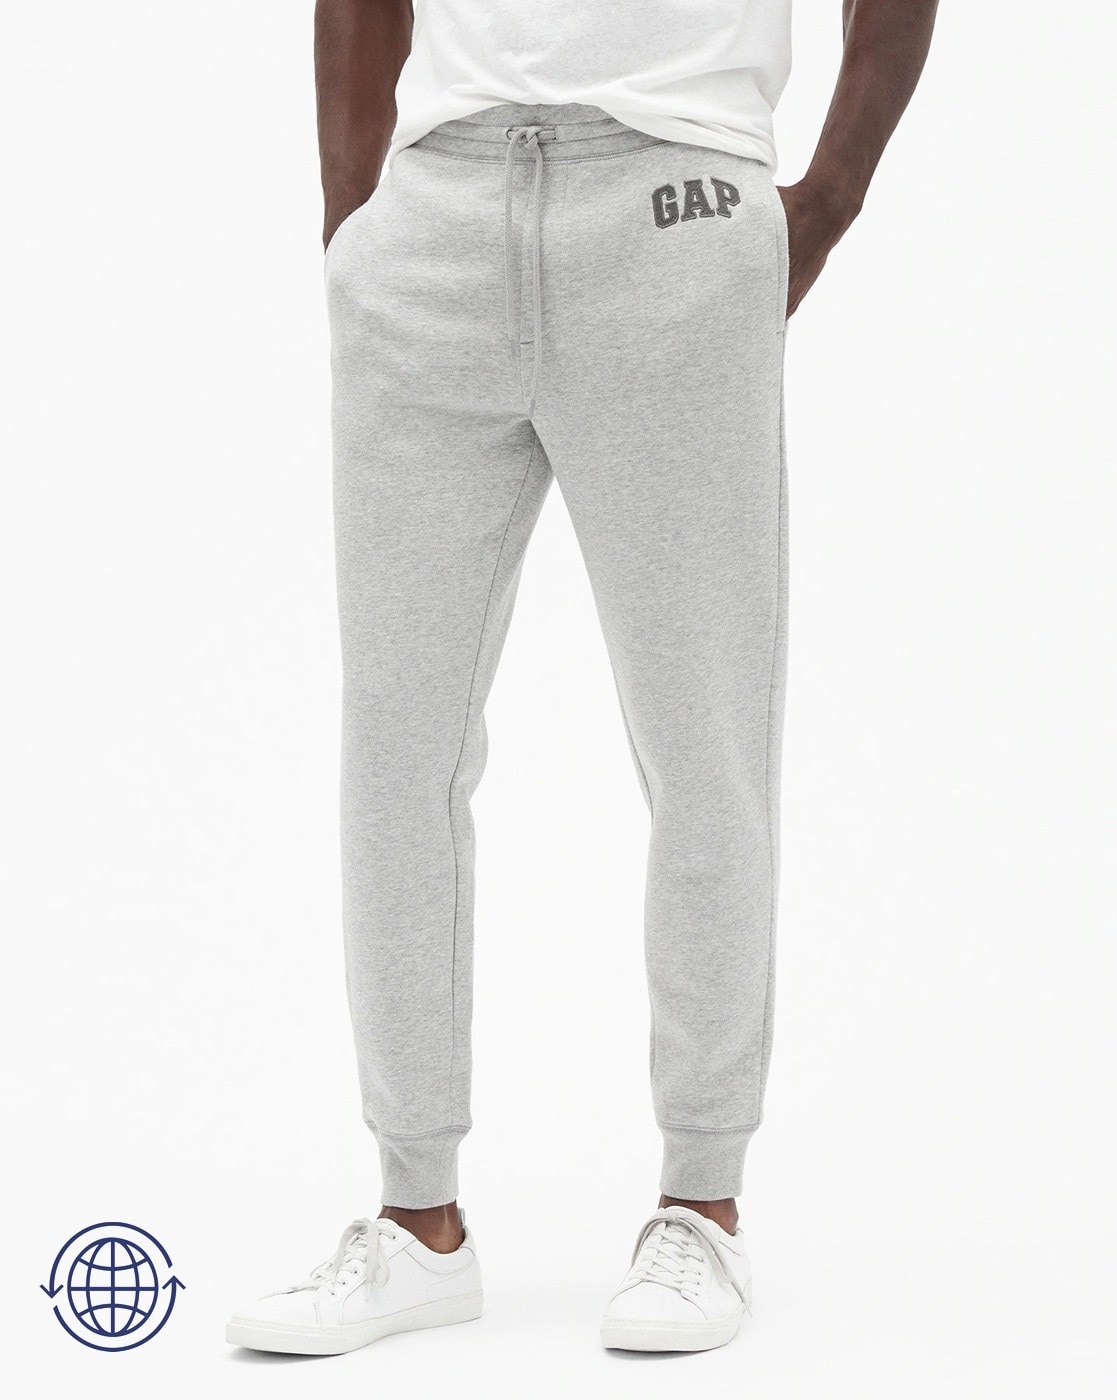 Buy Navy Blue Track Pants for Men by GAP Online | Ajio.com